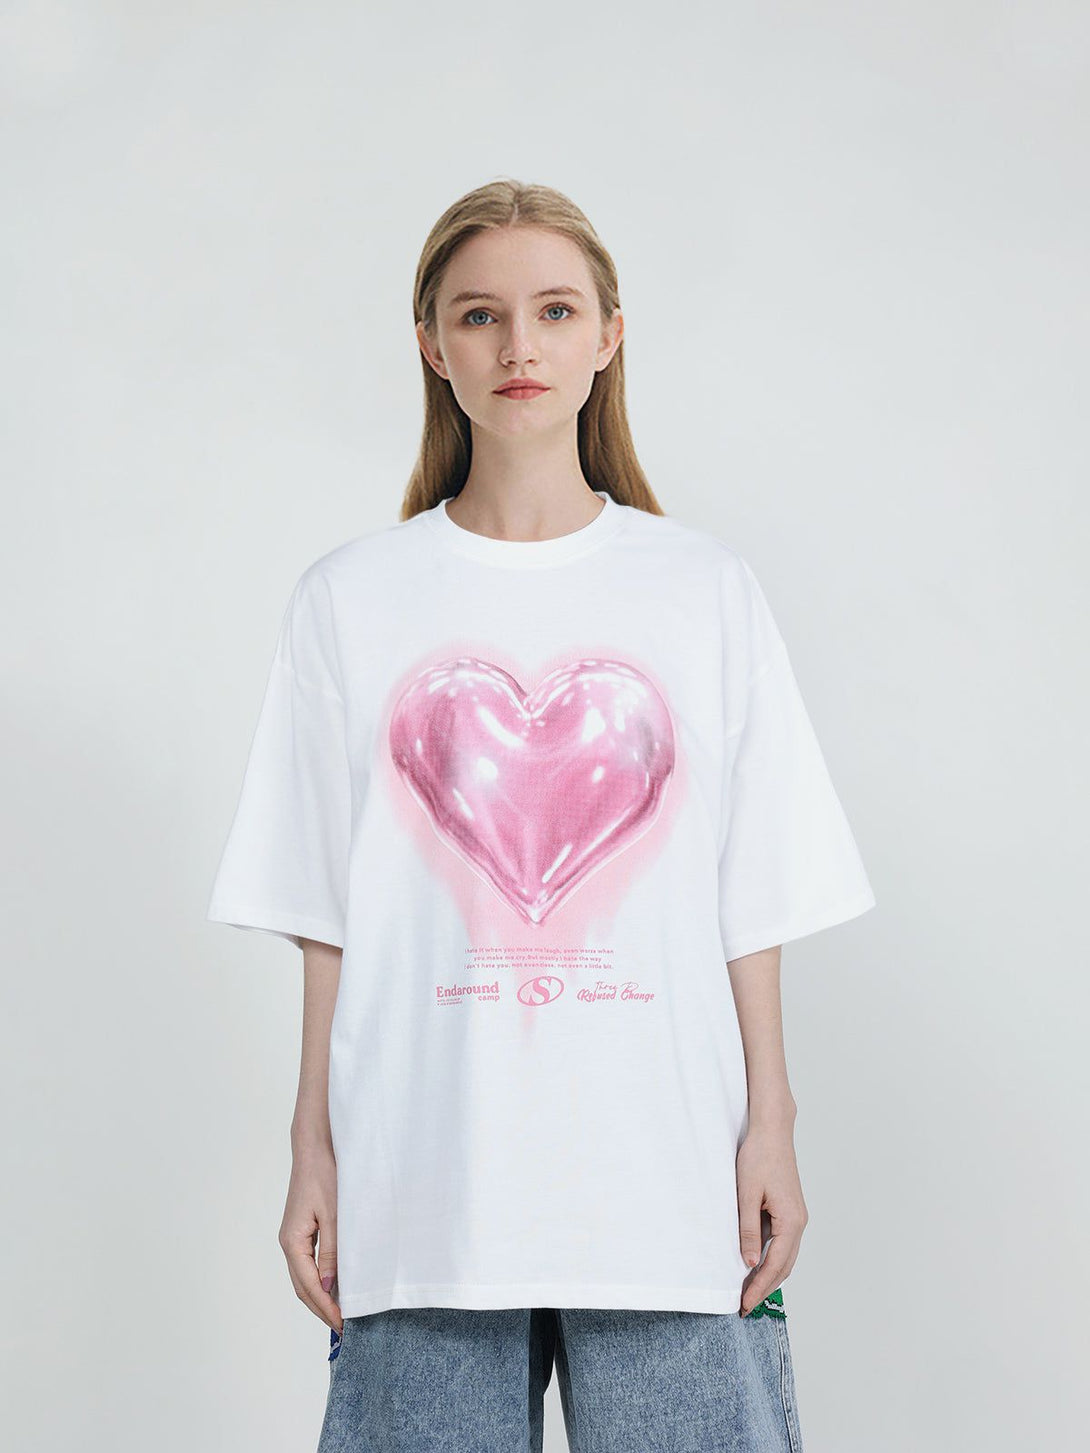 Majesda® - Love Balloon Graphic Tee- Outfit Ideas - Streetwear Fashion - majesda.com